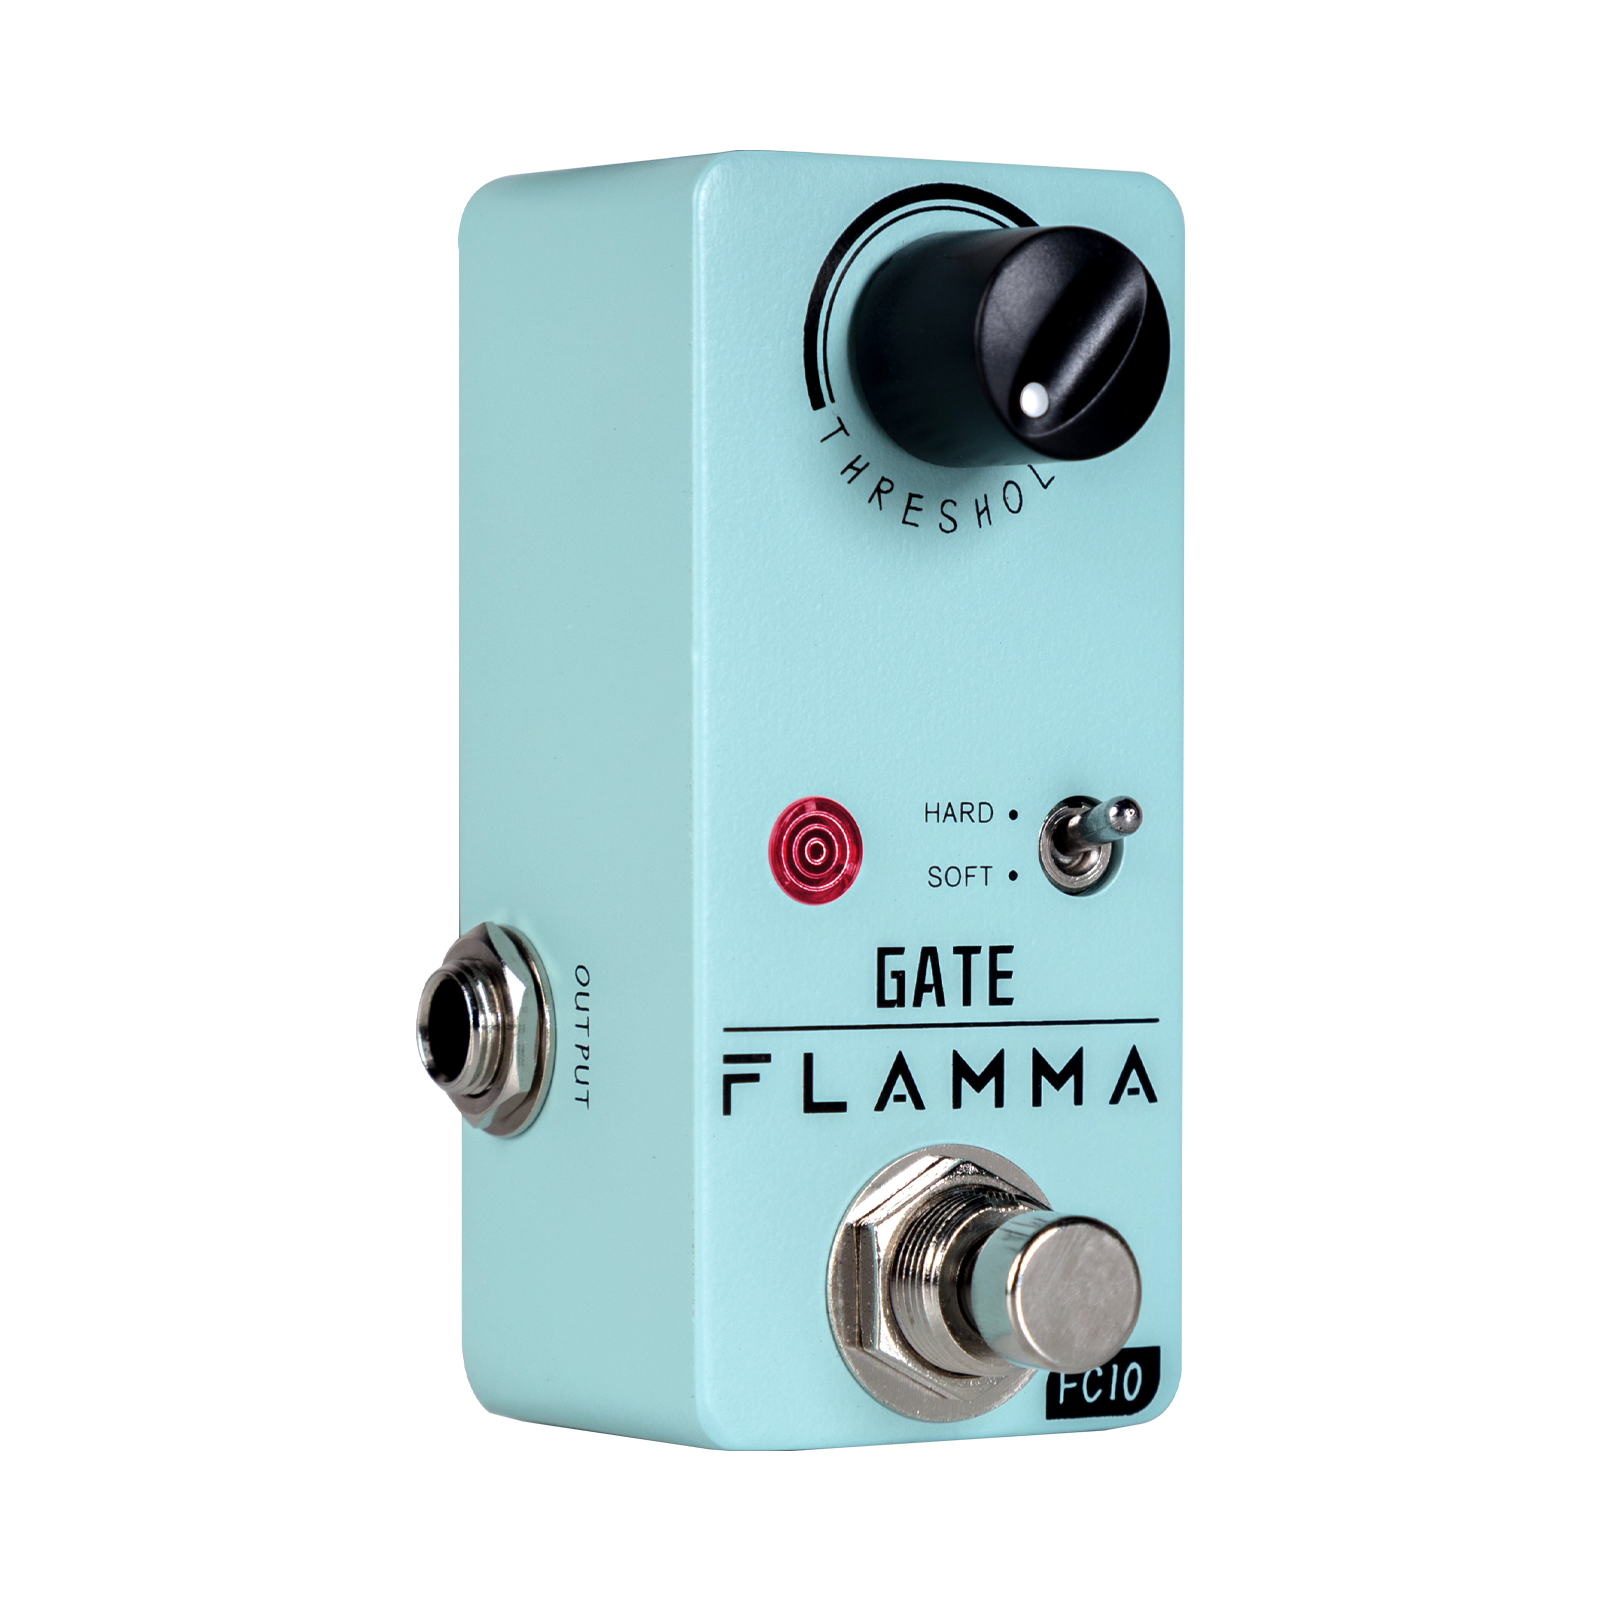 FLAMMA FC10 Gate Noise Reduction Pedal